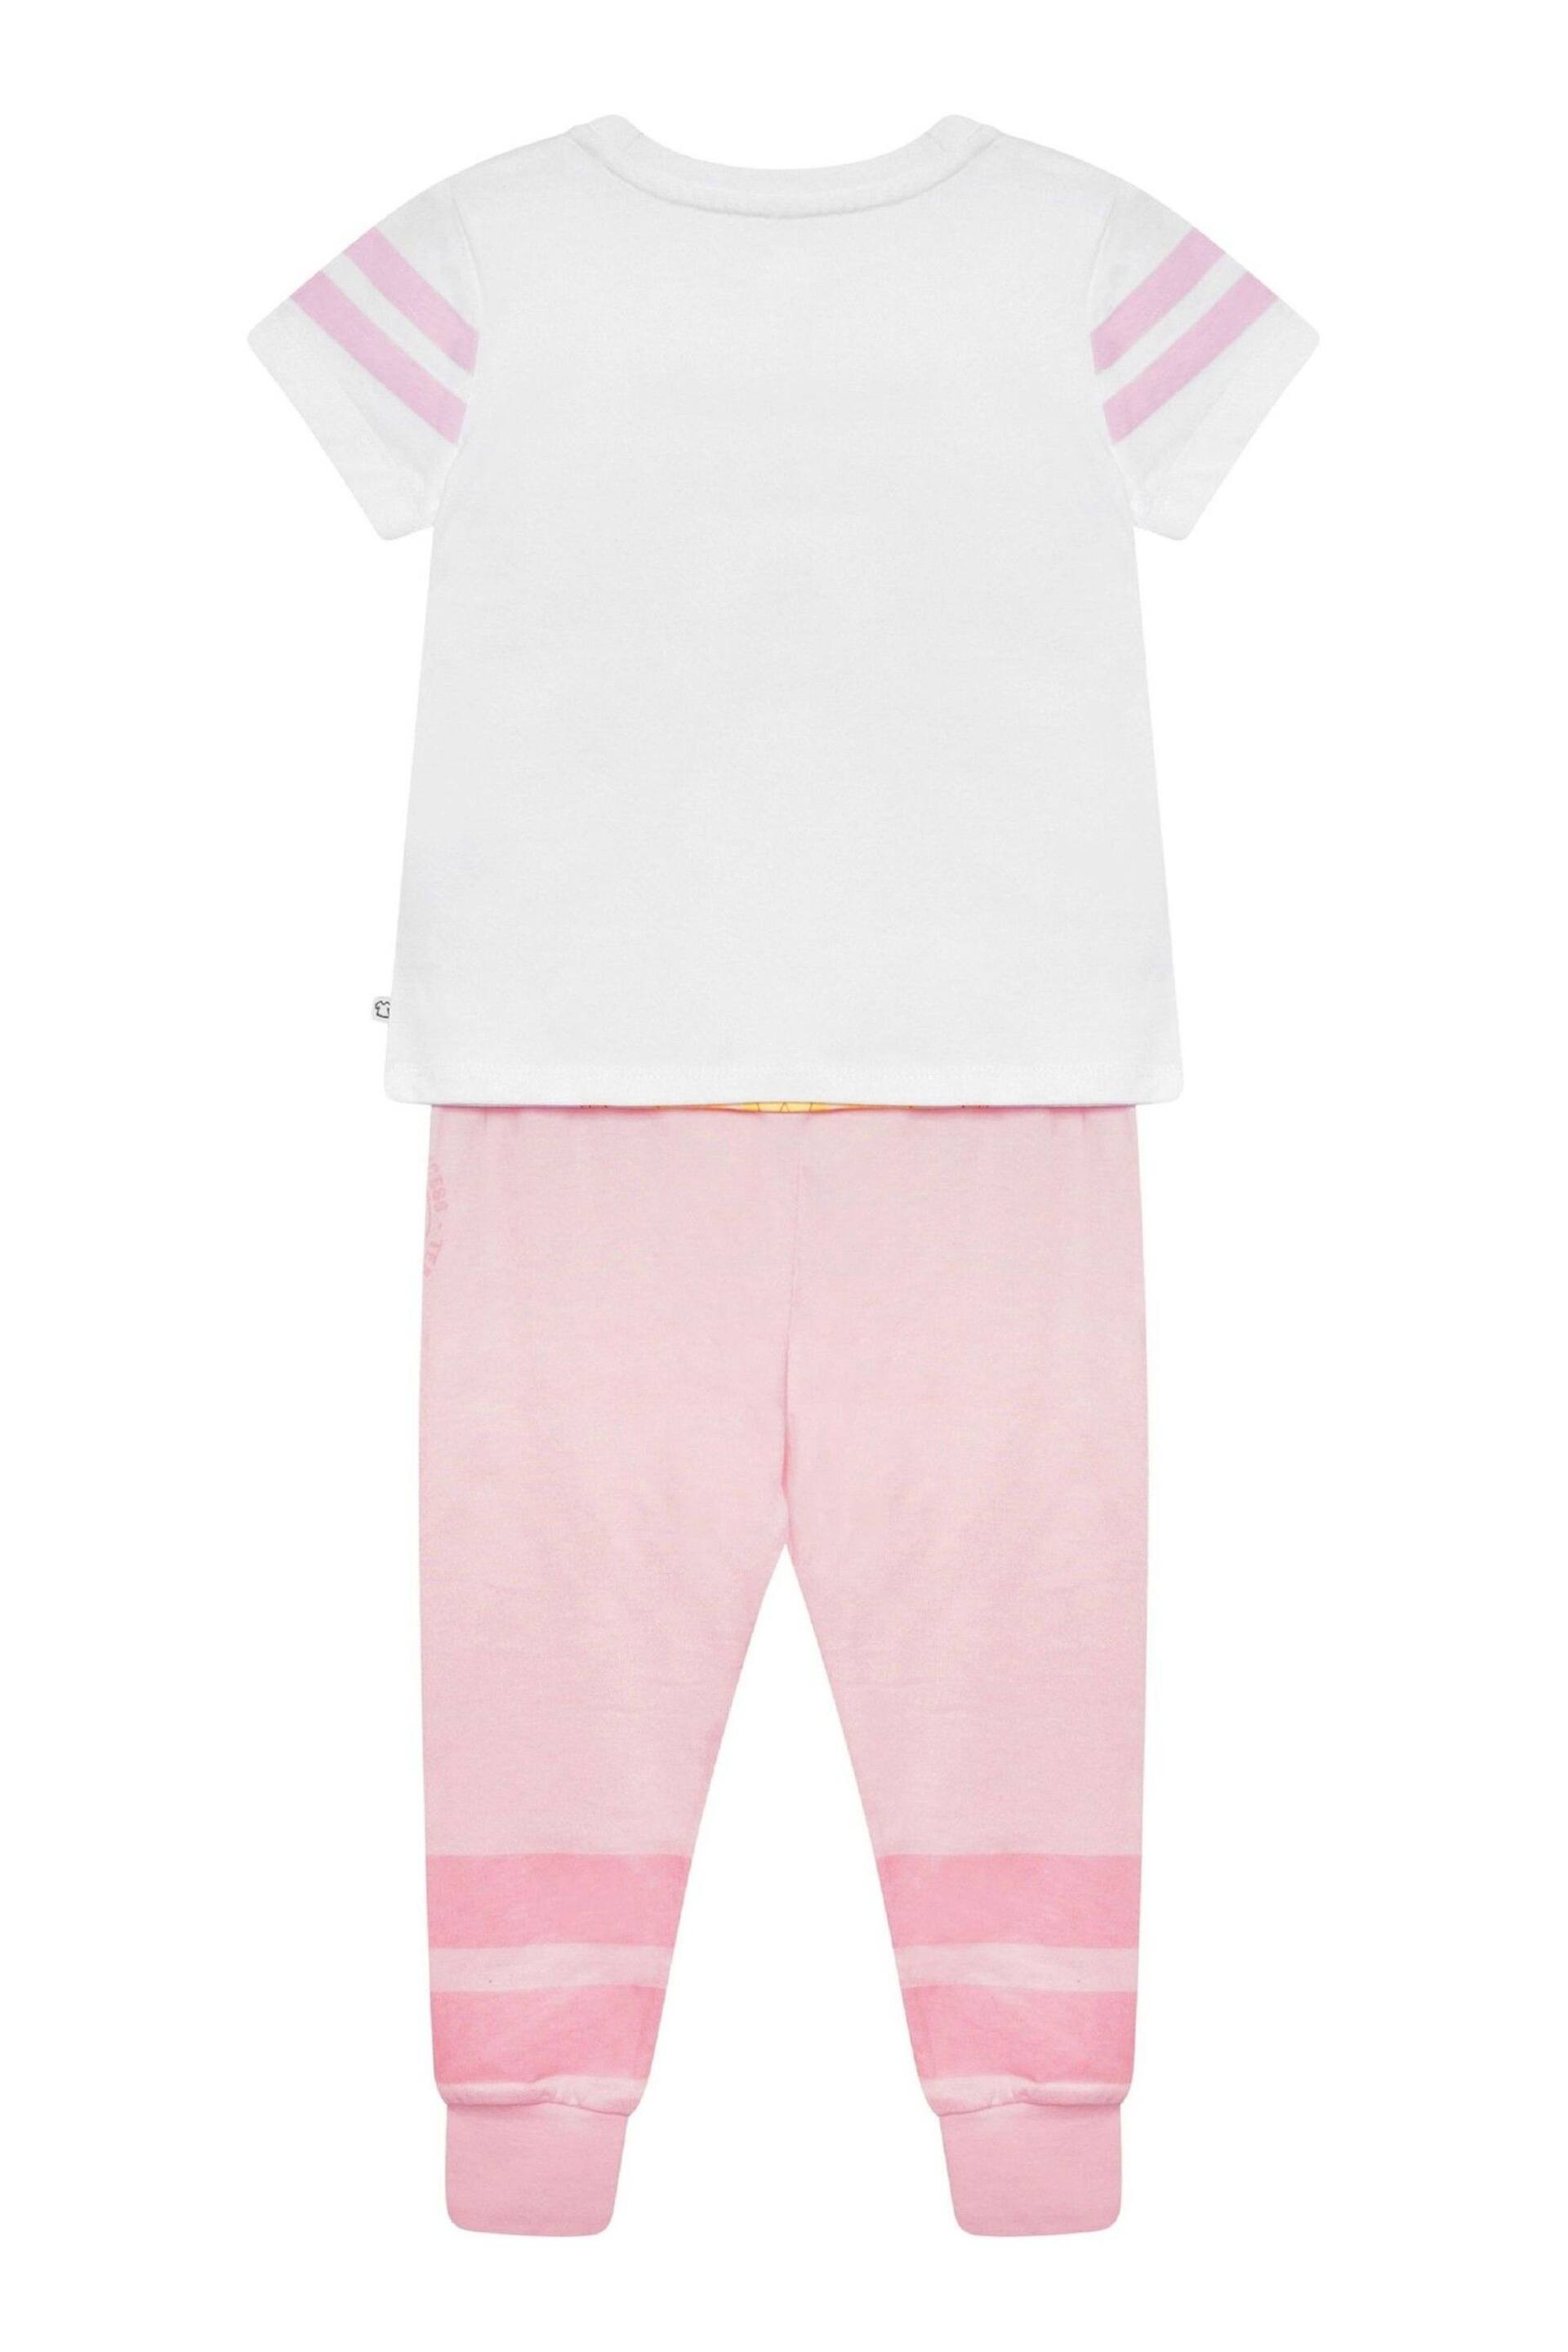 Brand Threads Pink Disney Princces Girls Pyjama Set - Image 5 of 5